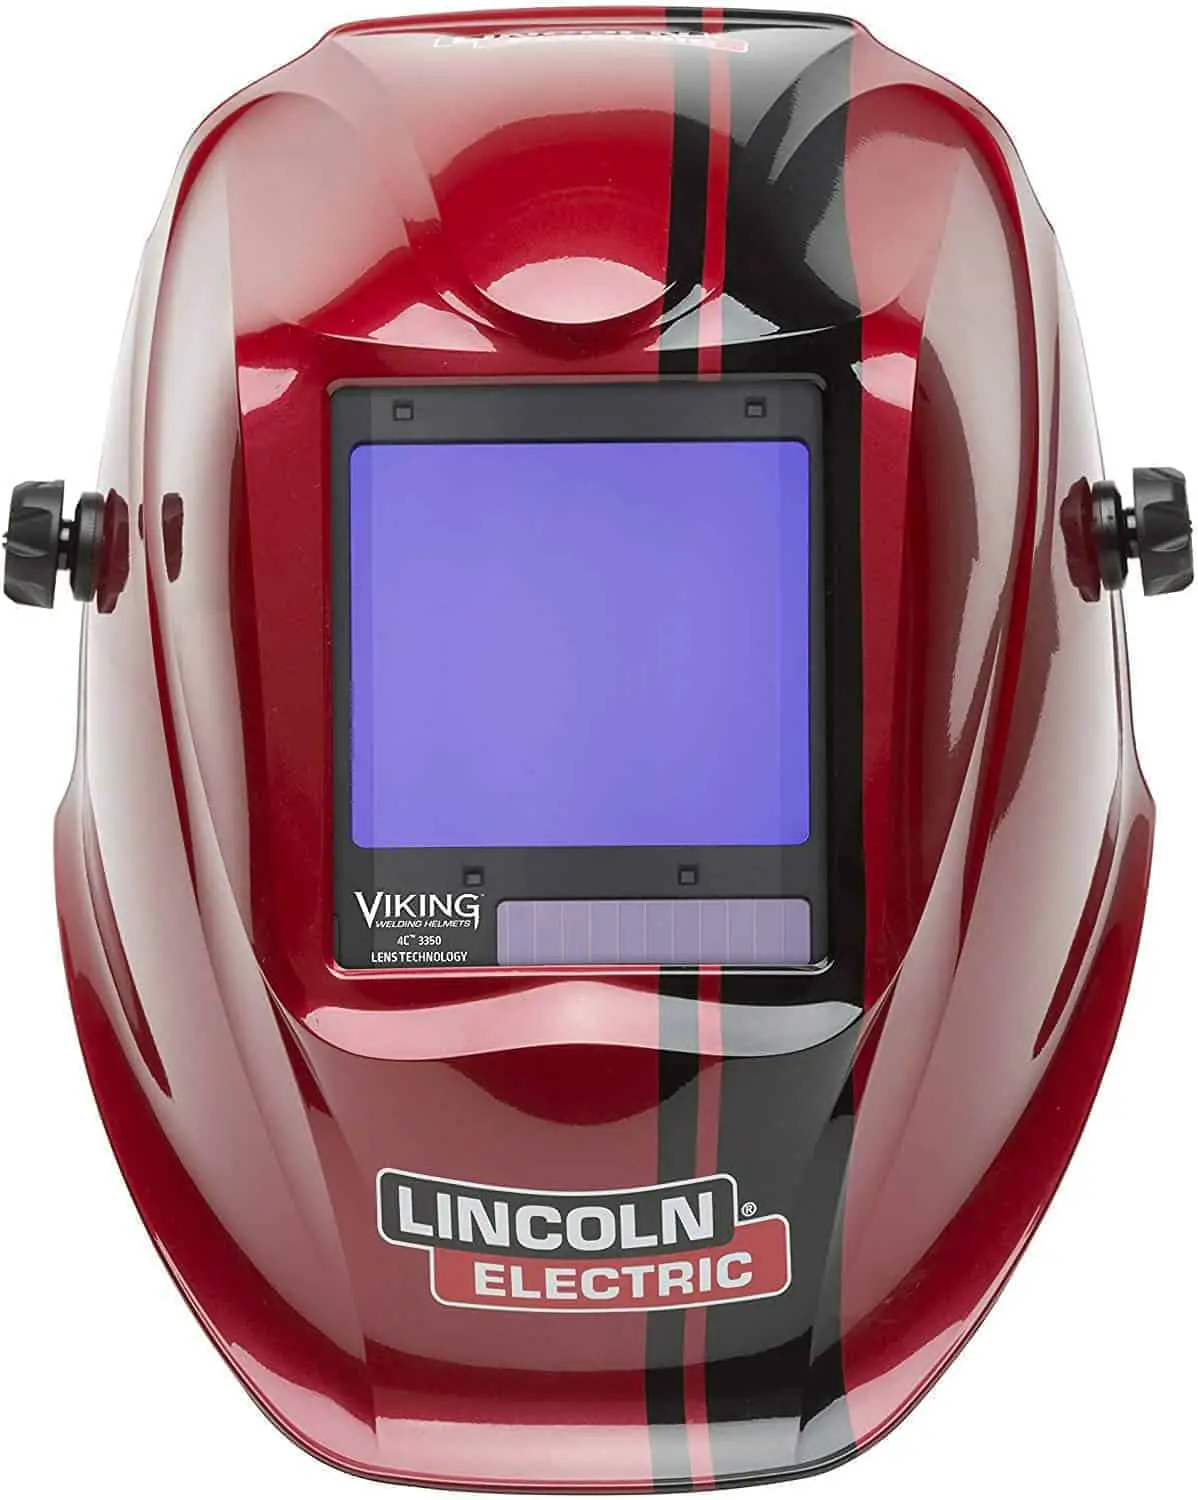 lincoln-electric-viking-3350-code-red-welding-helmet-ram-welding-supply